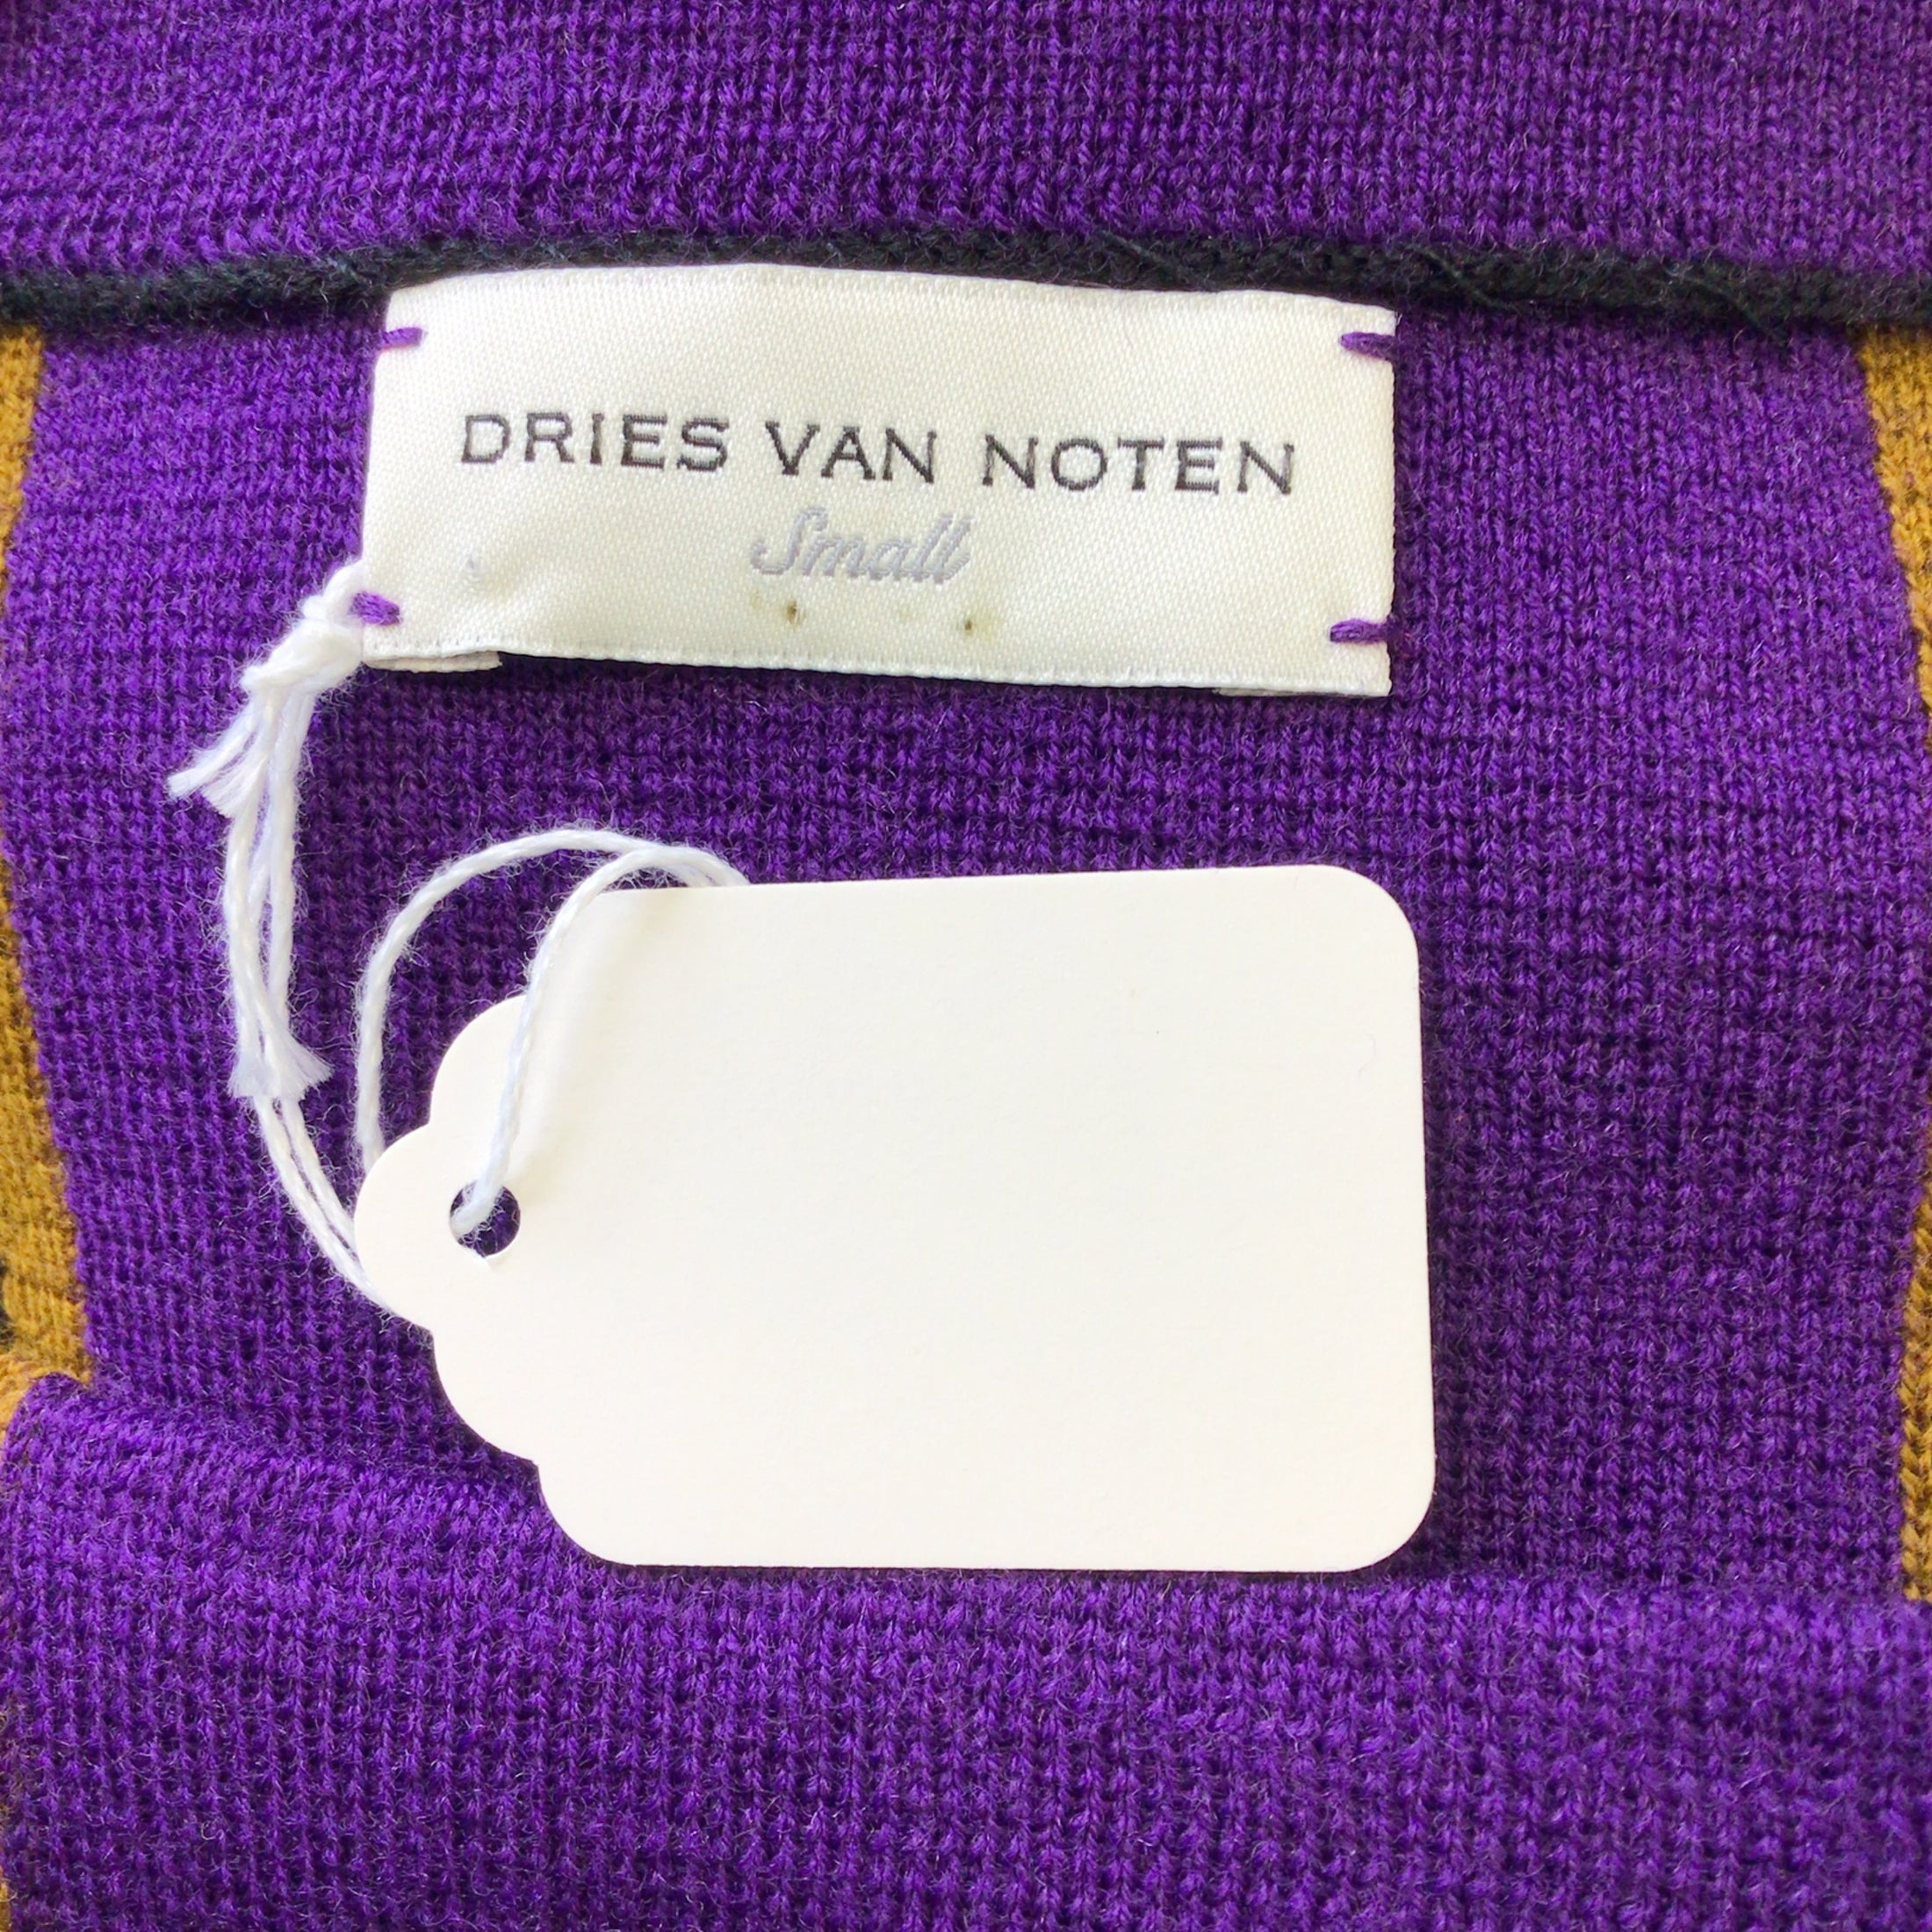 Dries van Noten Purple / Gold / Black Striped Long Sleeved Merino Wool Knit Sweater